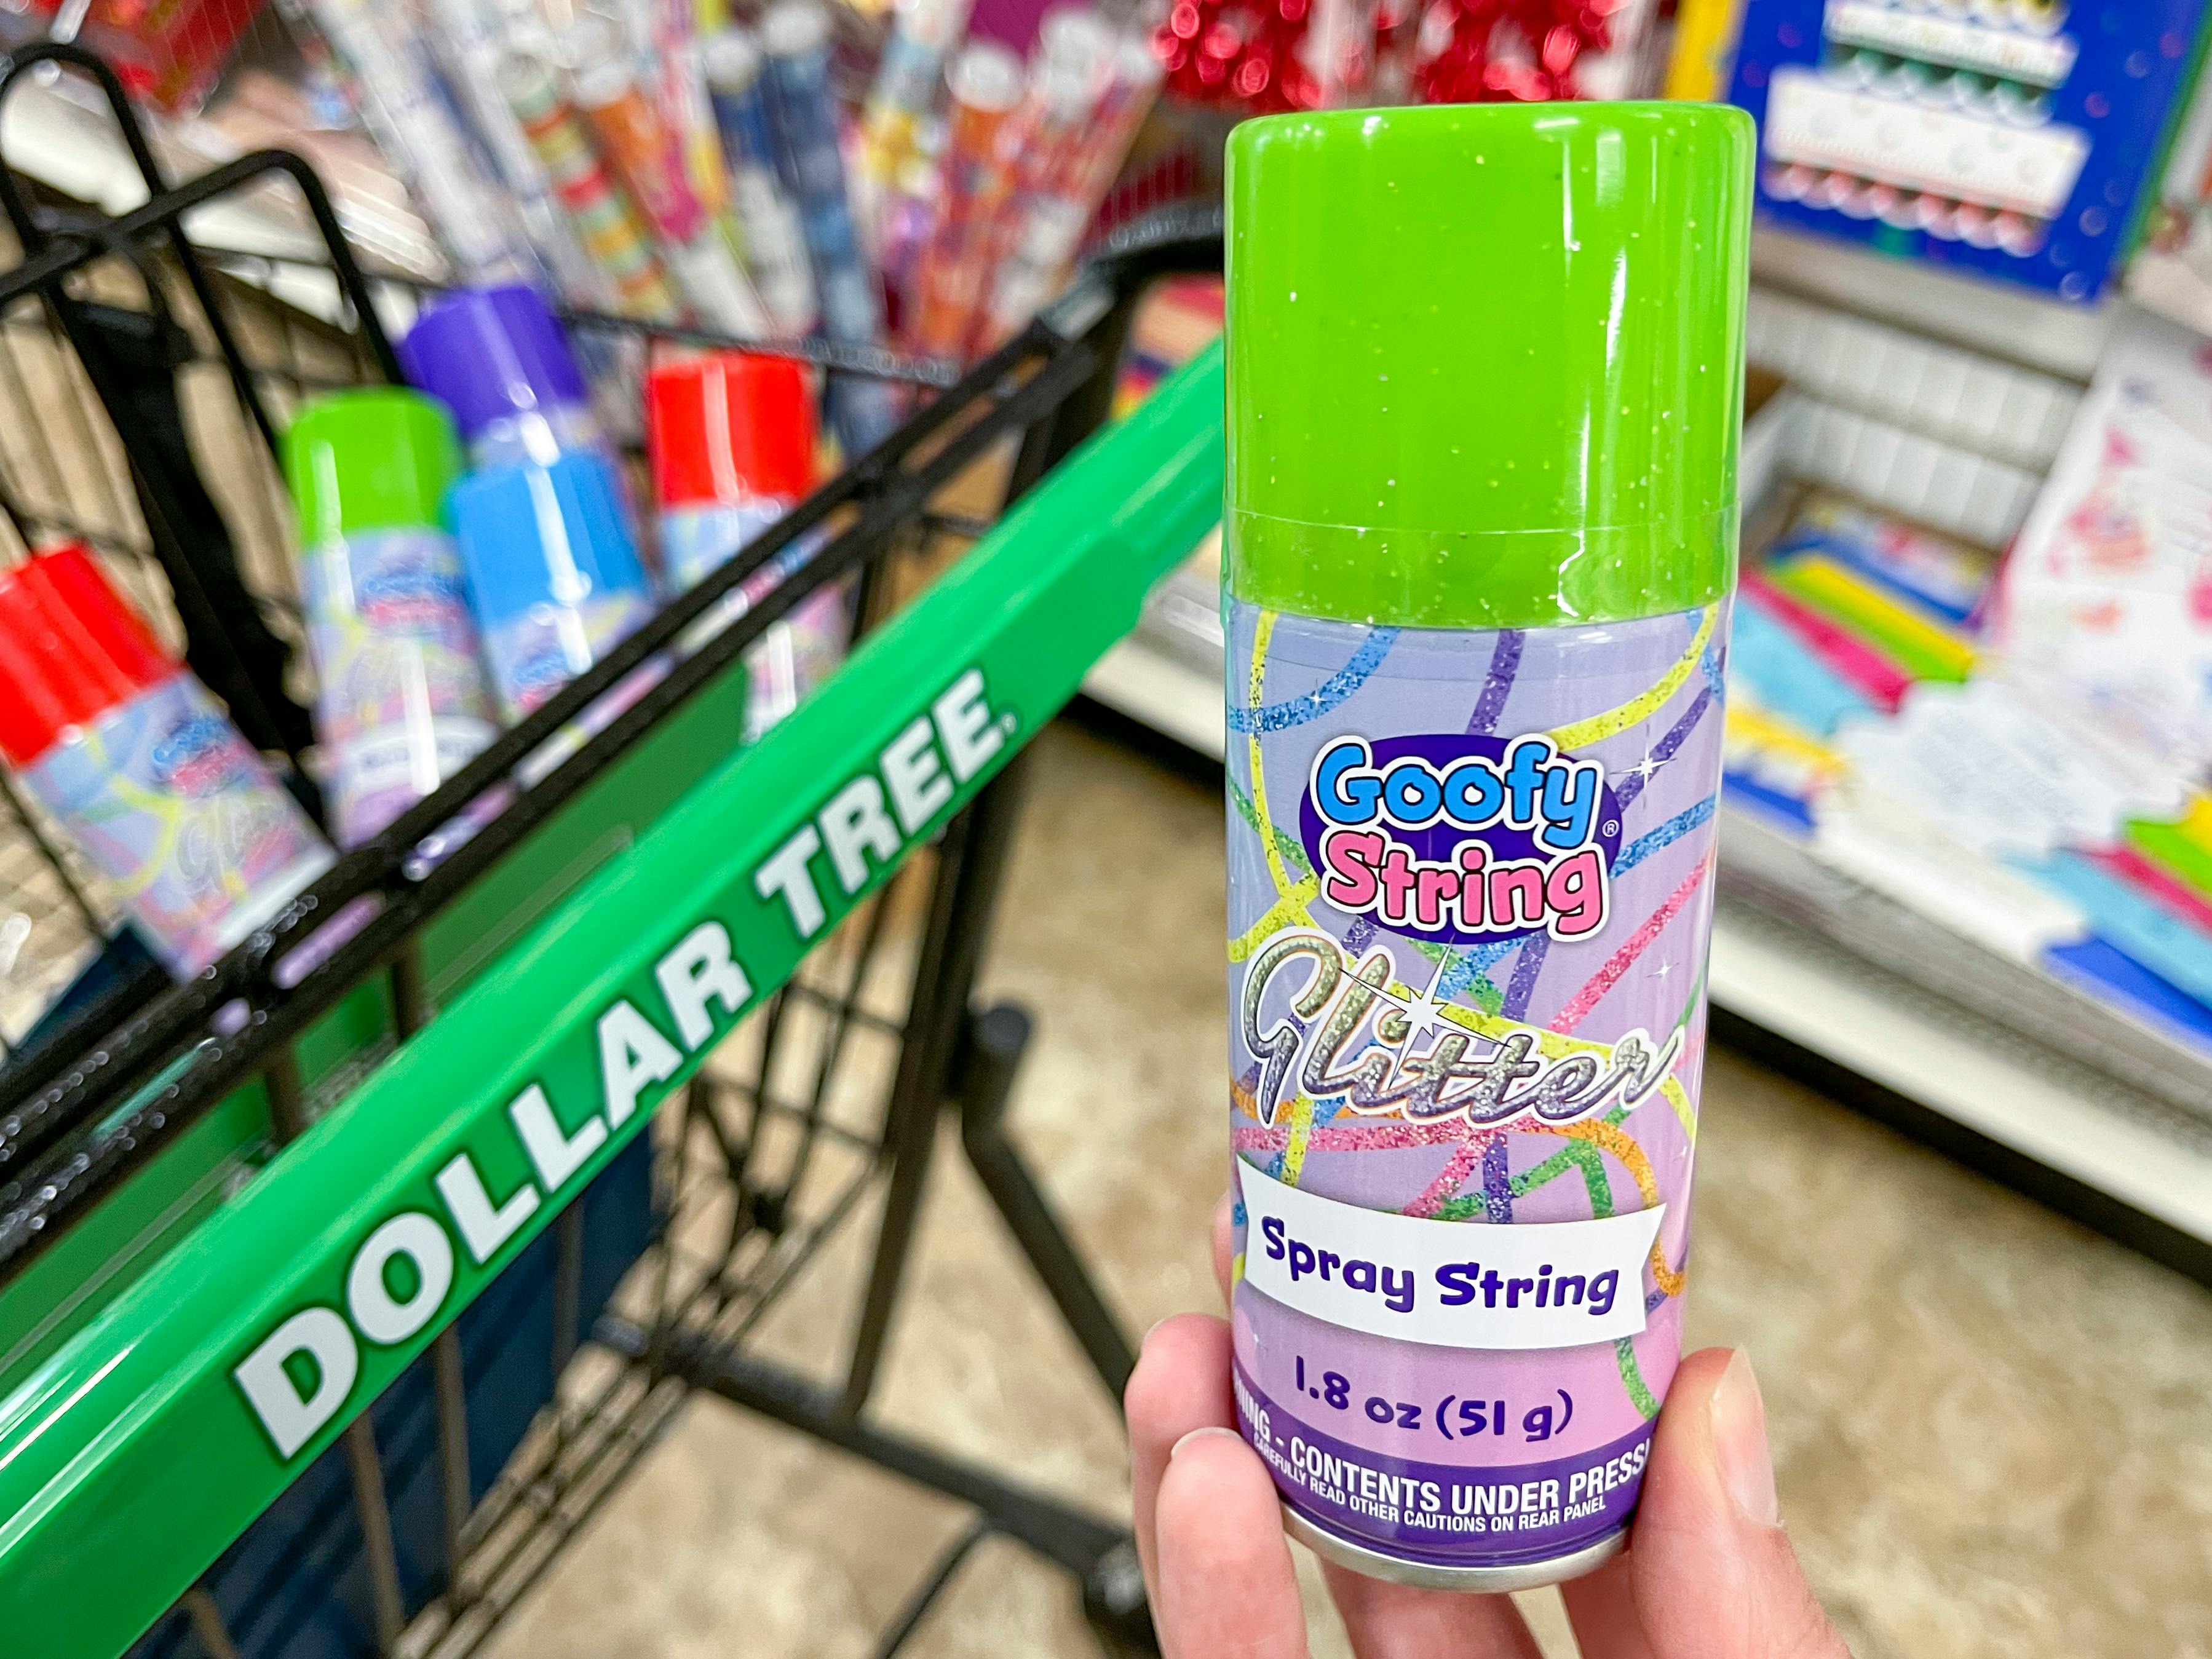 goofy glitter spray string near dollar tree store cart